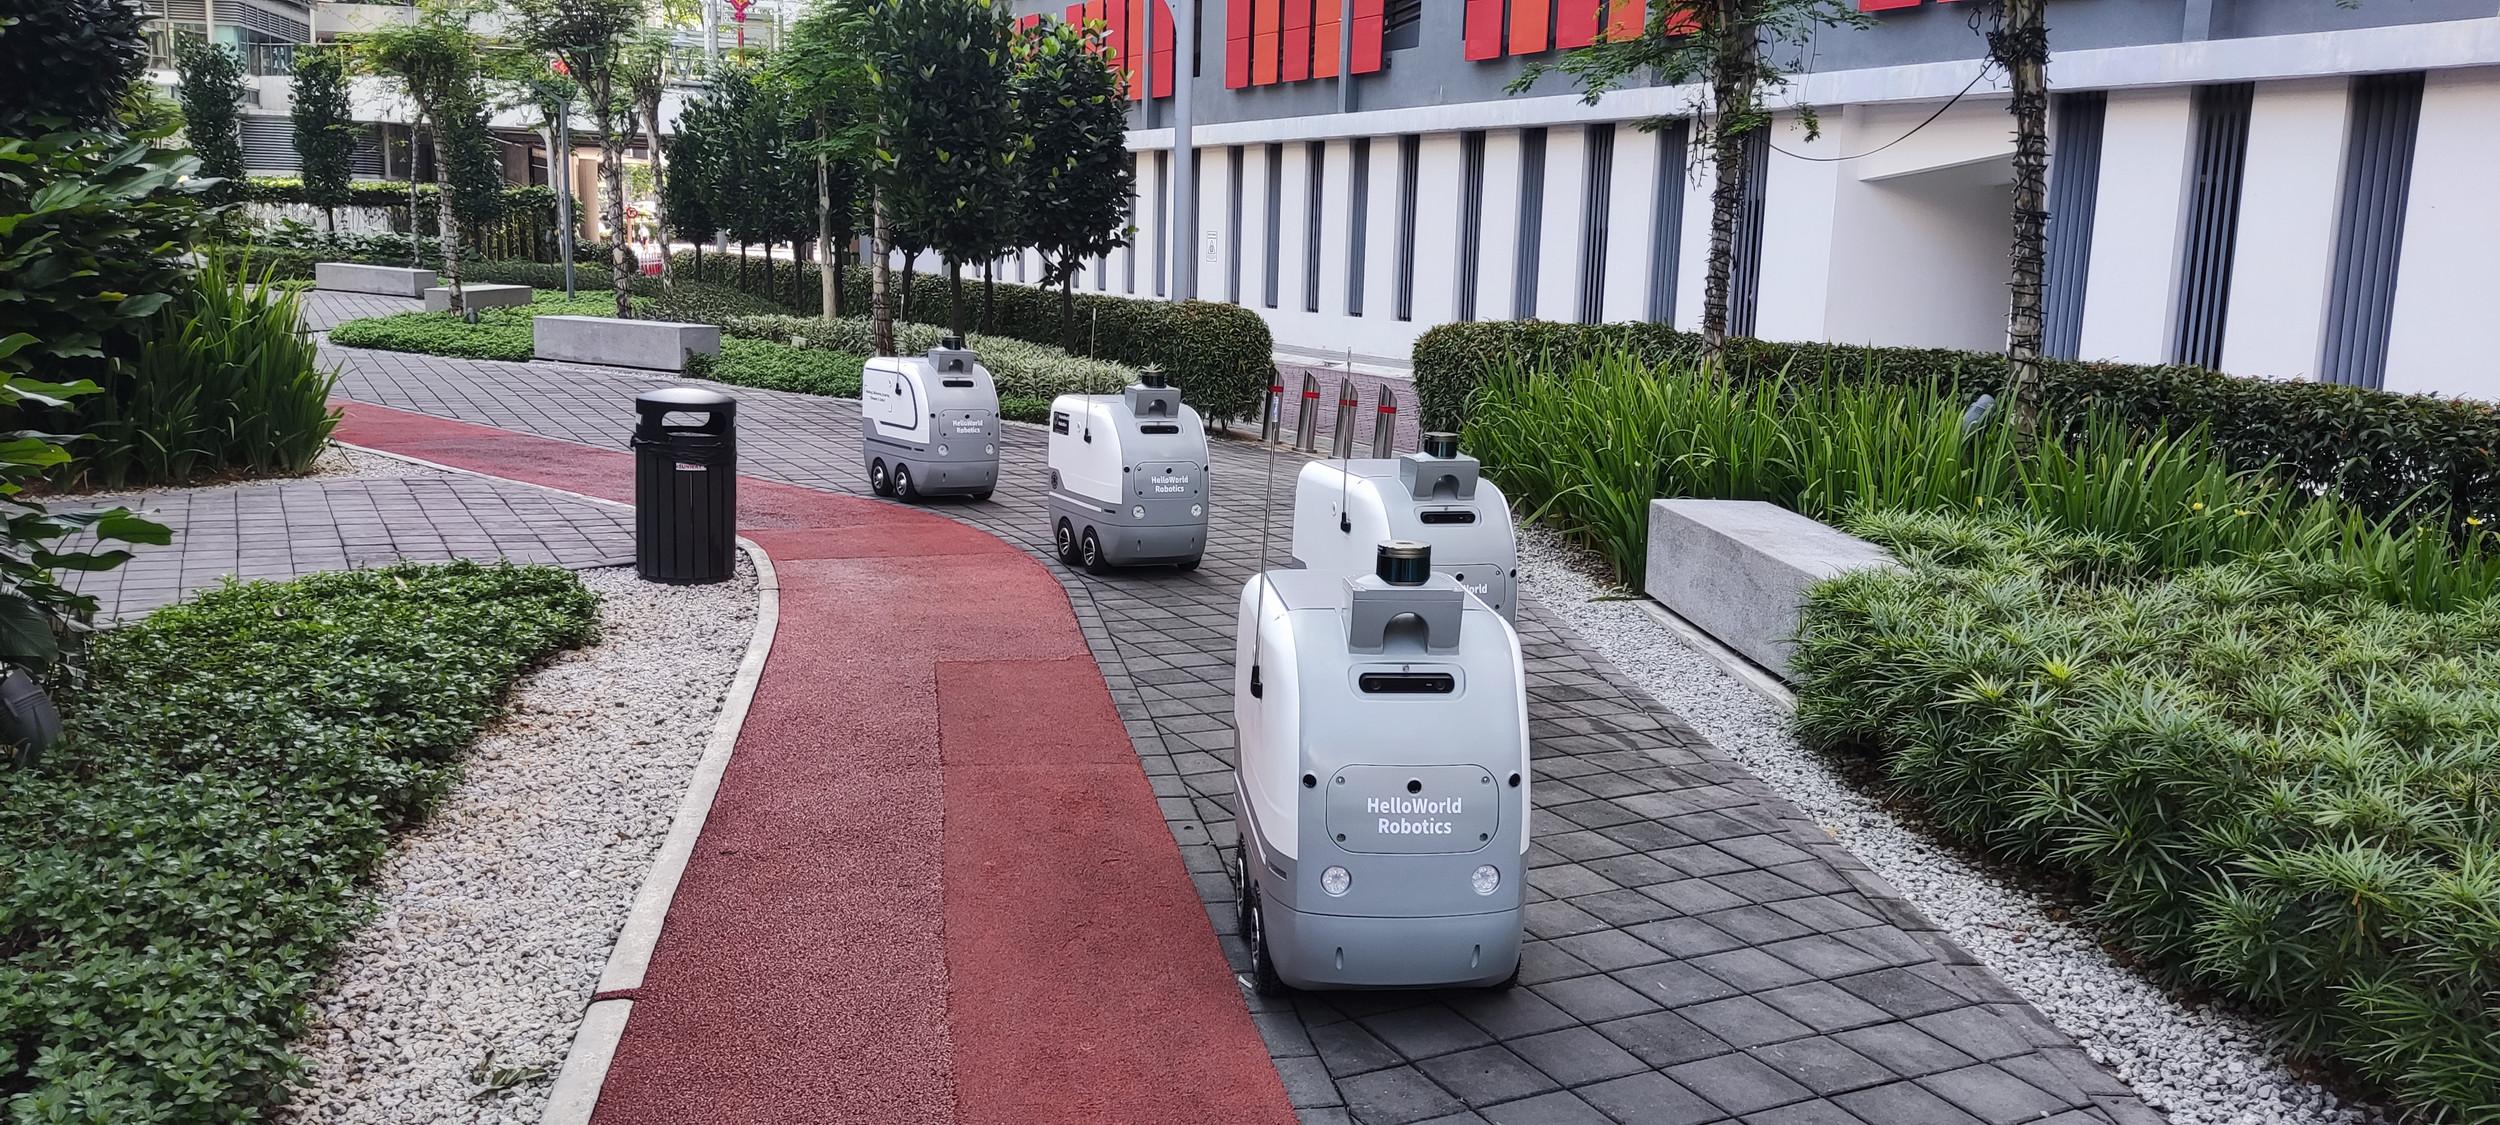 Image for PRODUCT | HelloWorld Robotics | Autonomous Delivery Robot | Malaysia | Singapore